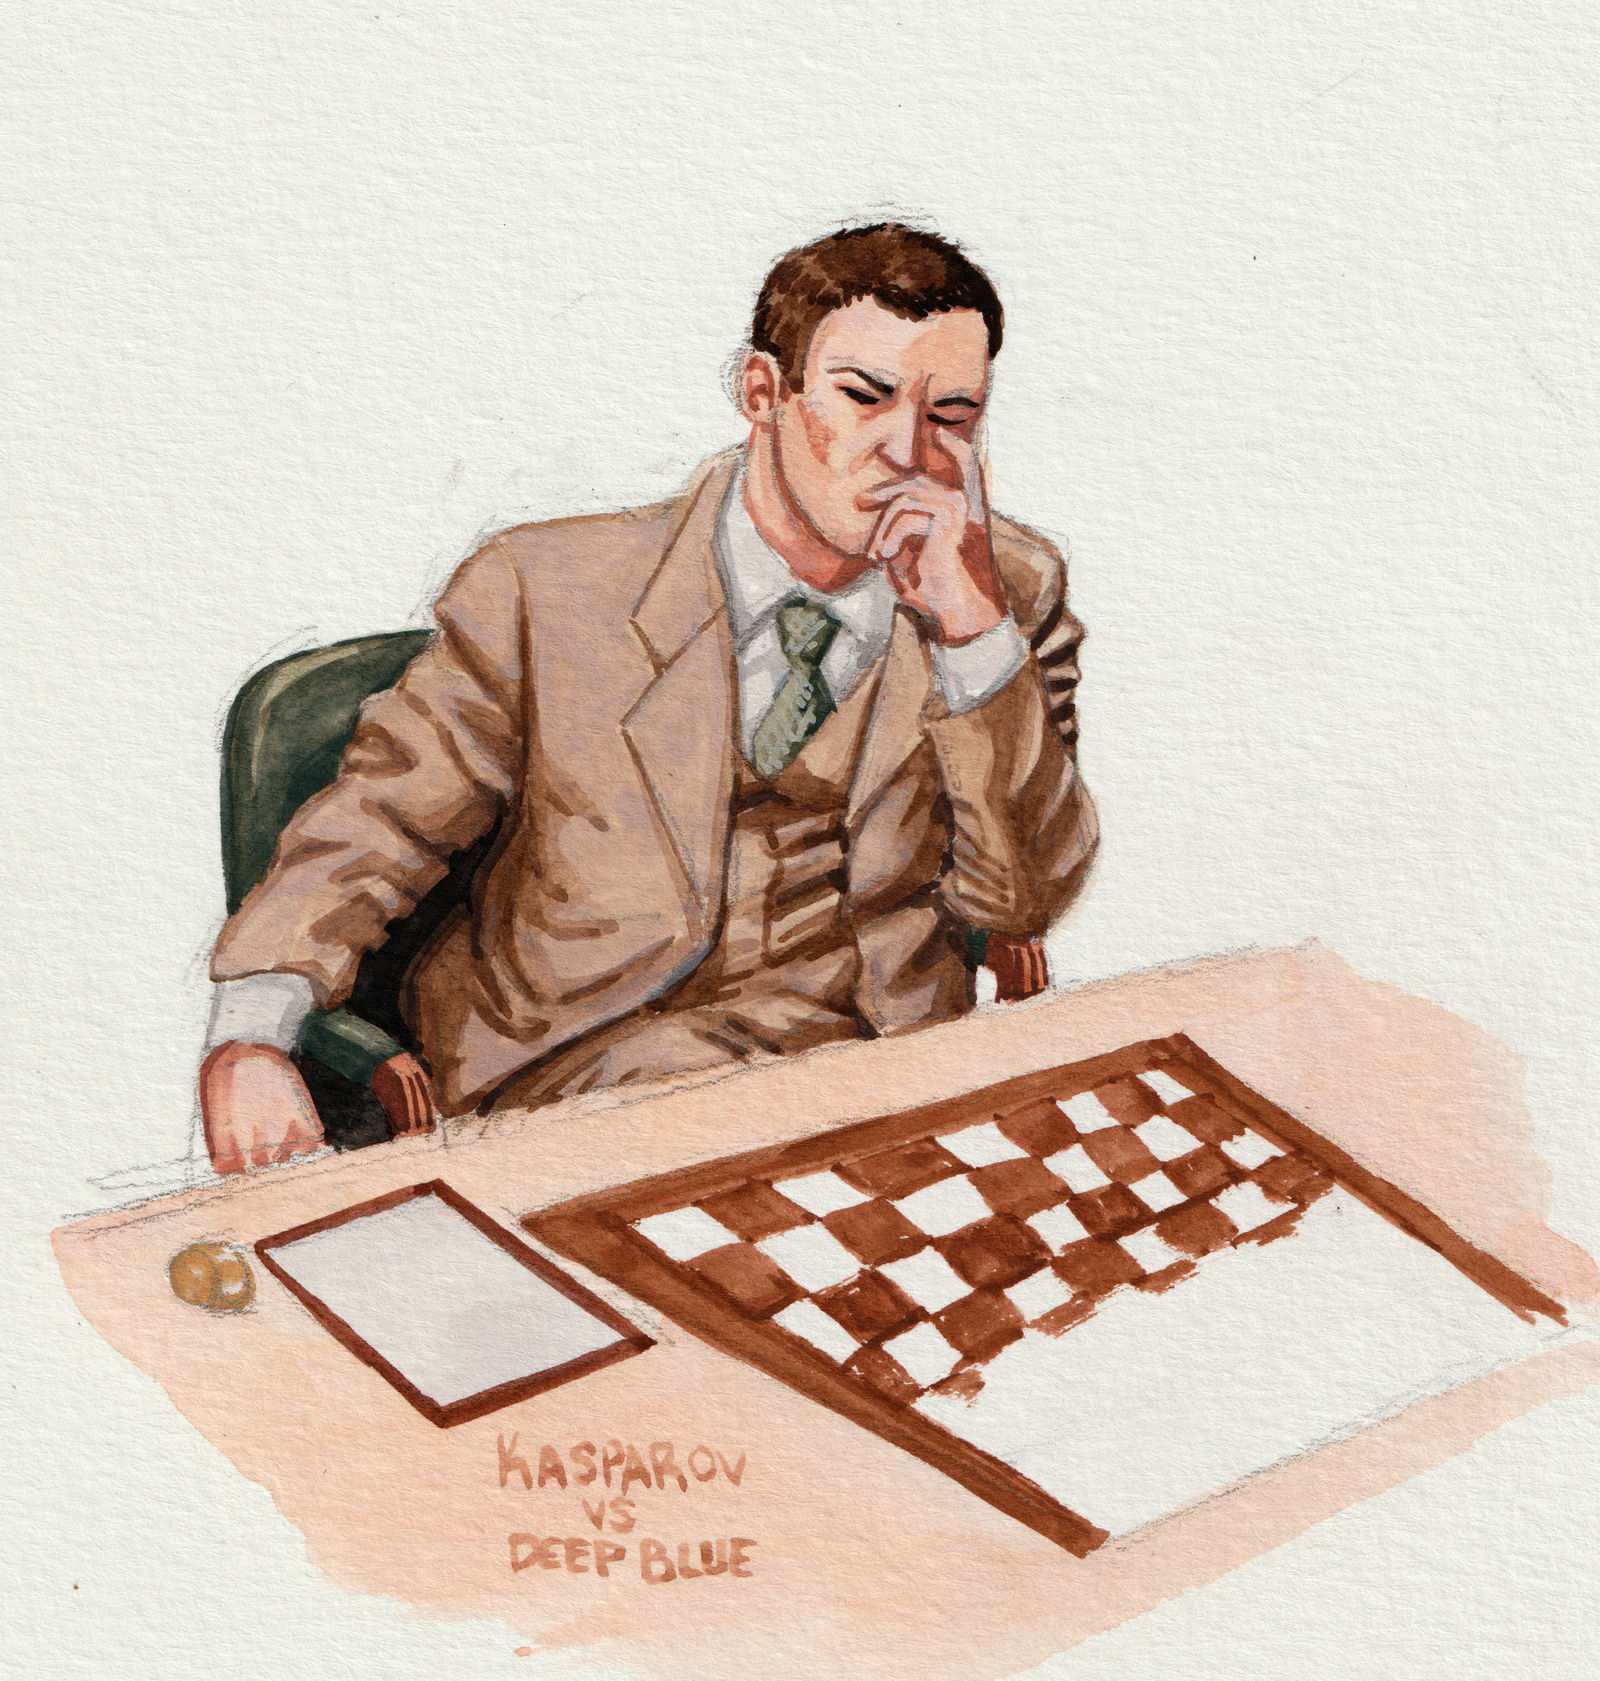 Garry Kasparov had a chess showdown with IBM's AI long before